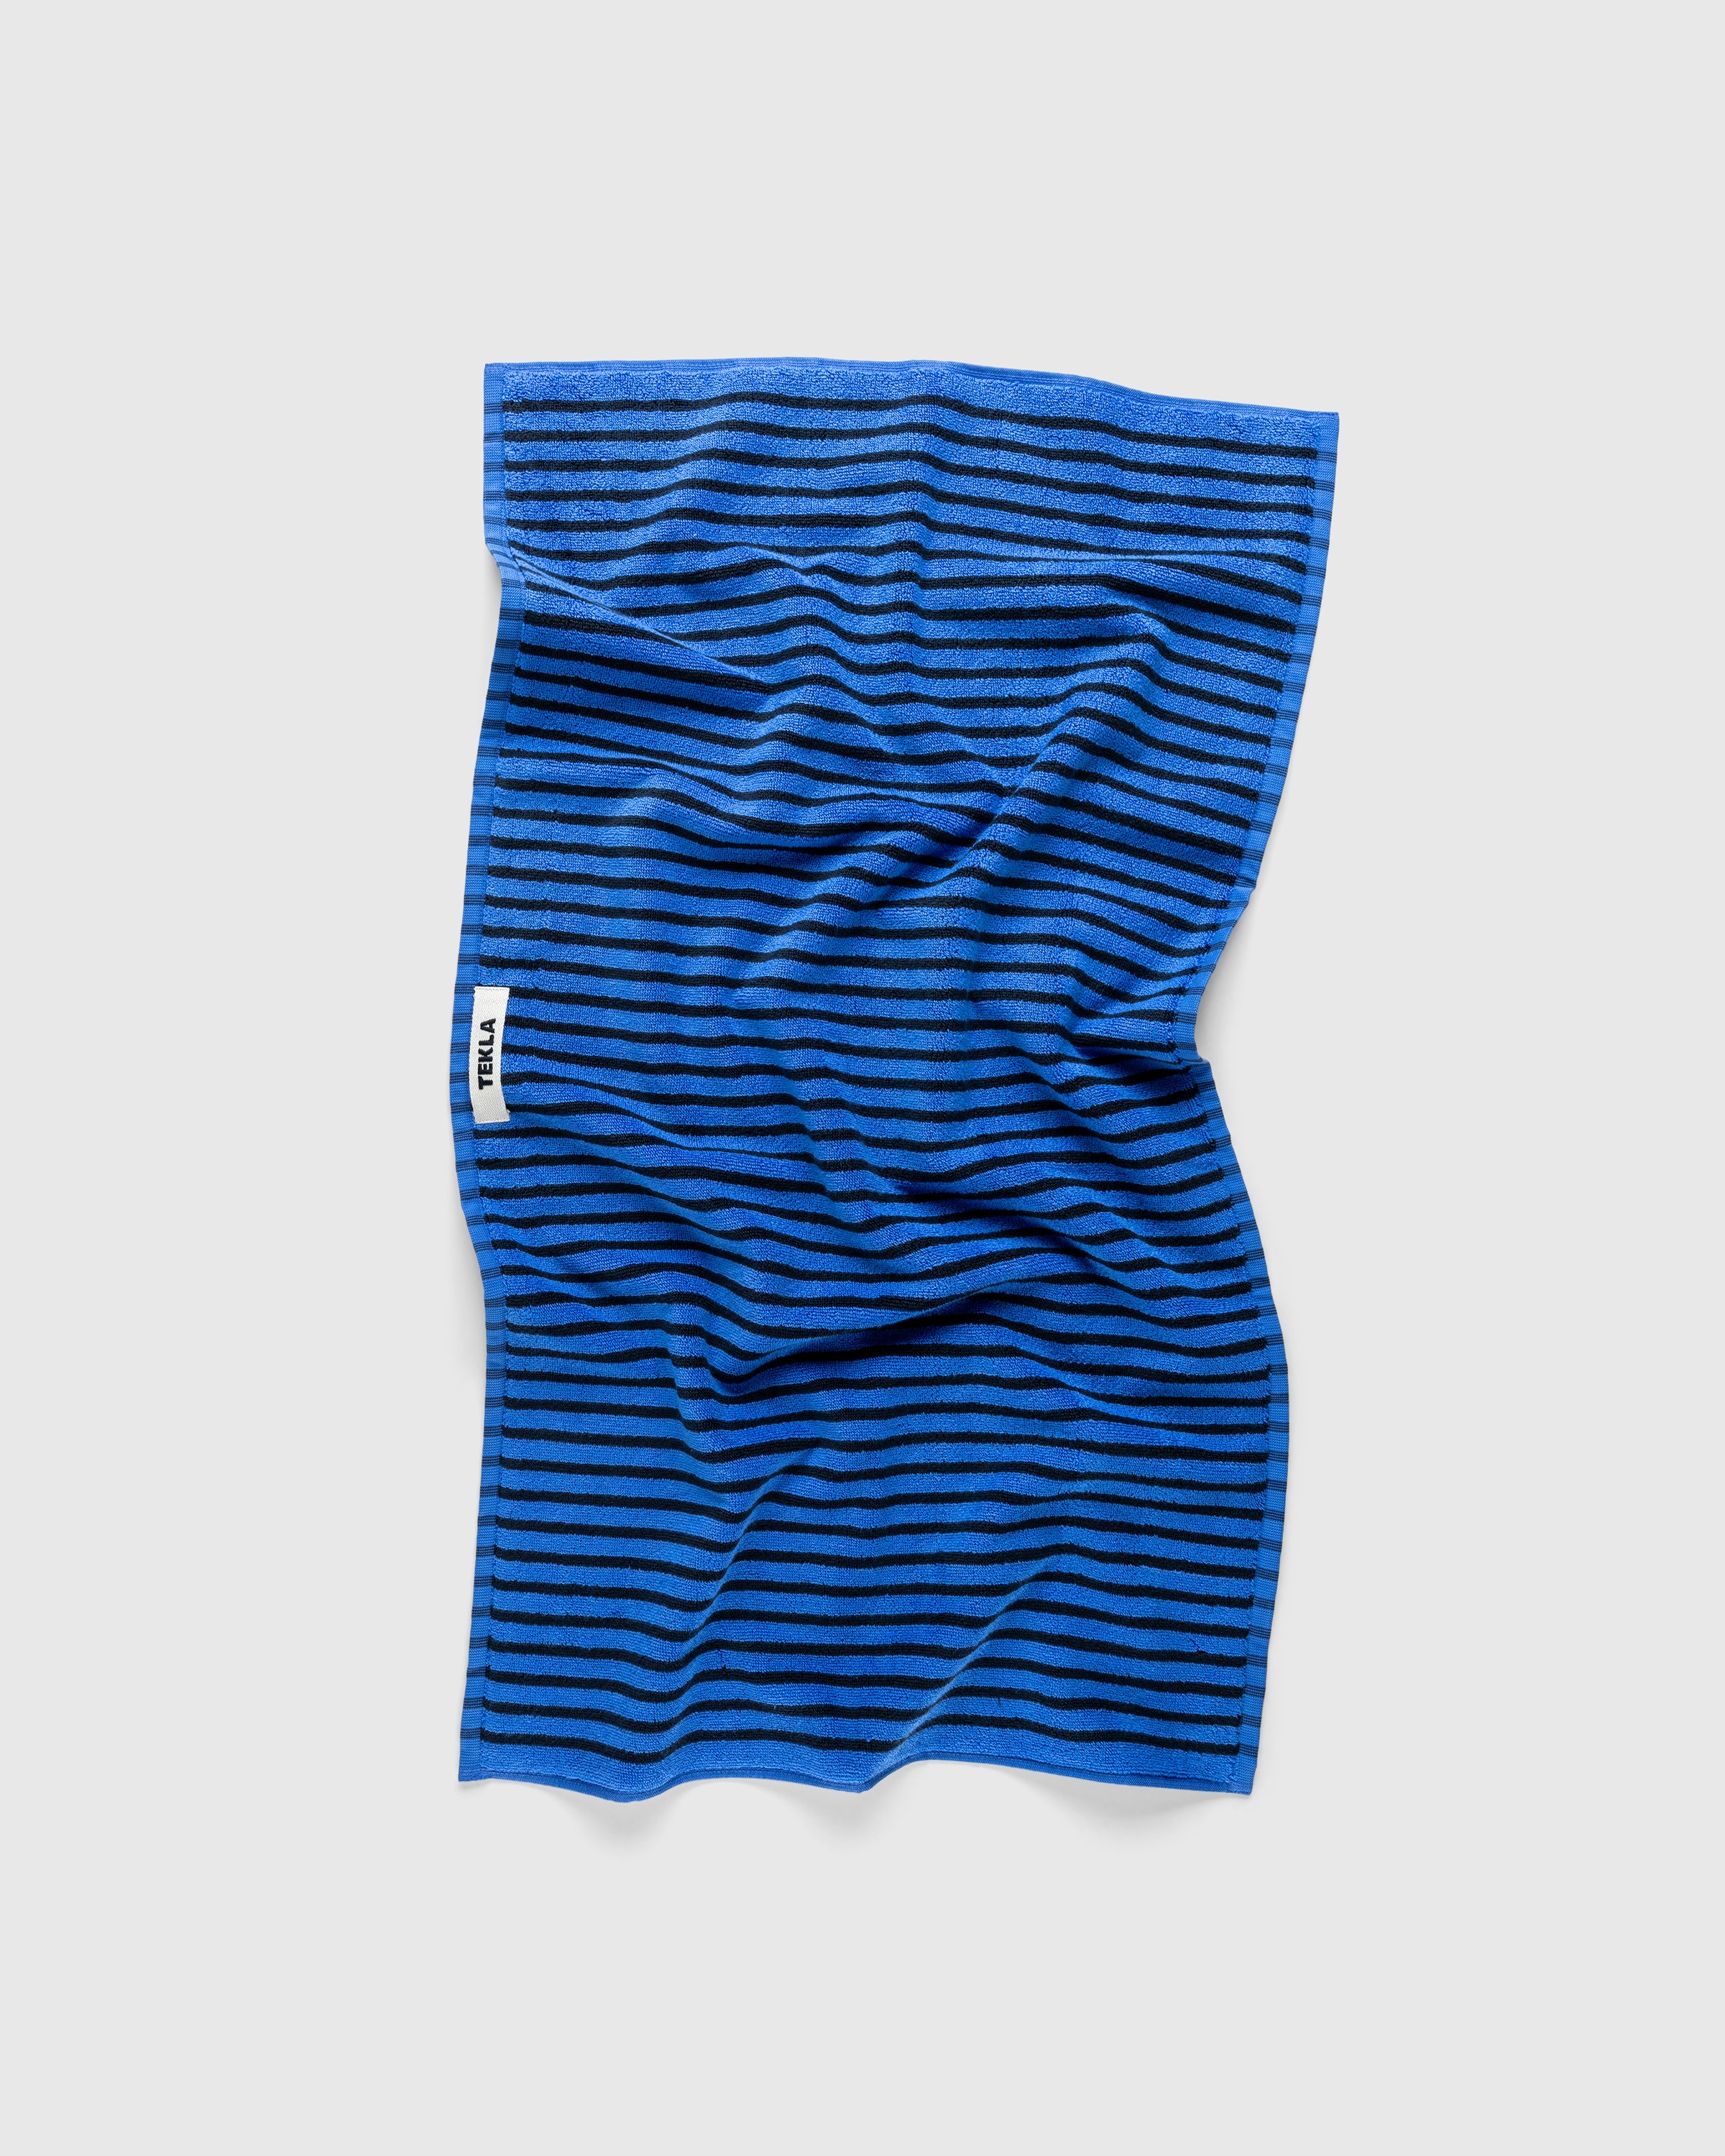 Tekla - Hand Towel Blue&Black - Lifestyle - Blue - Image 1